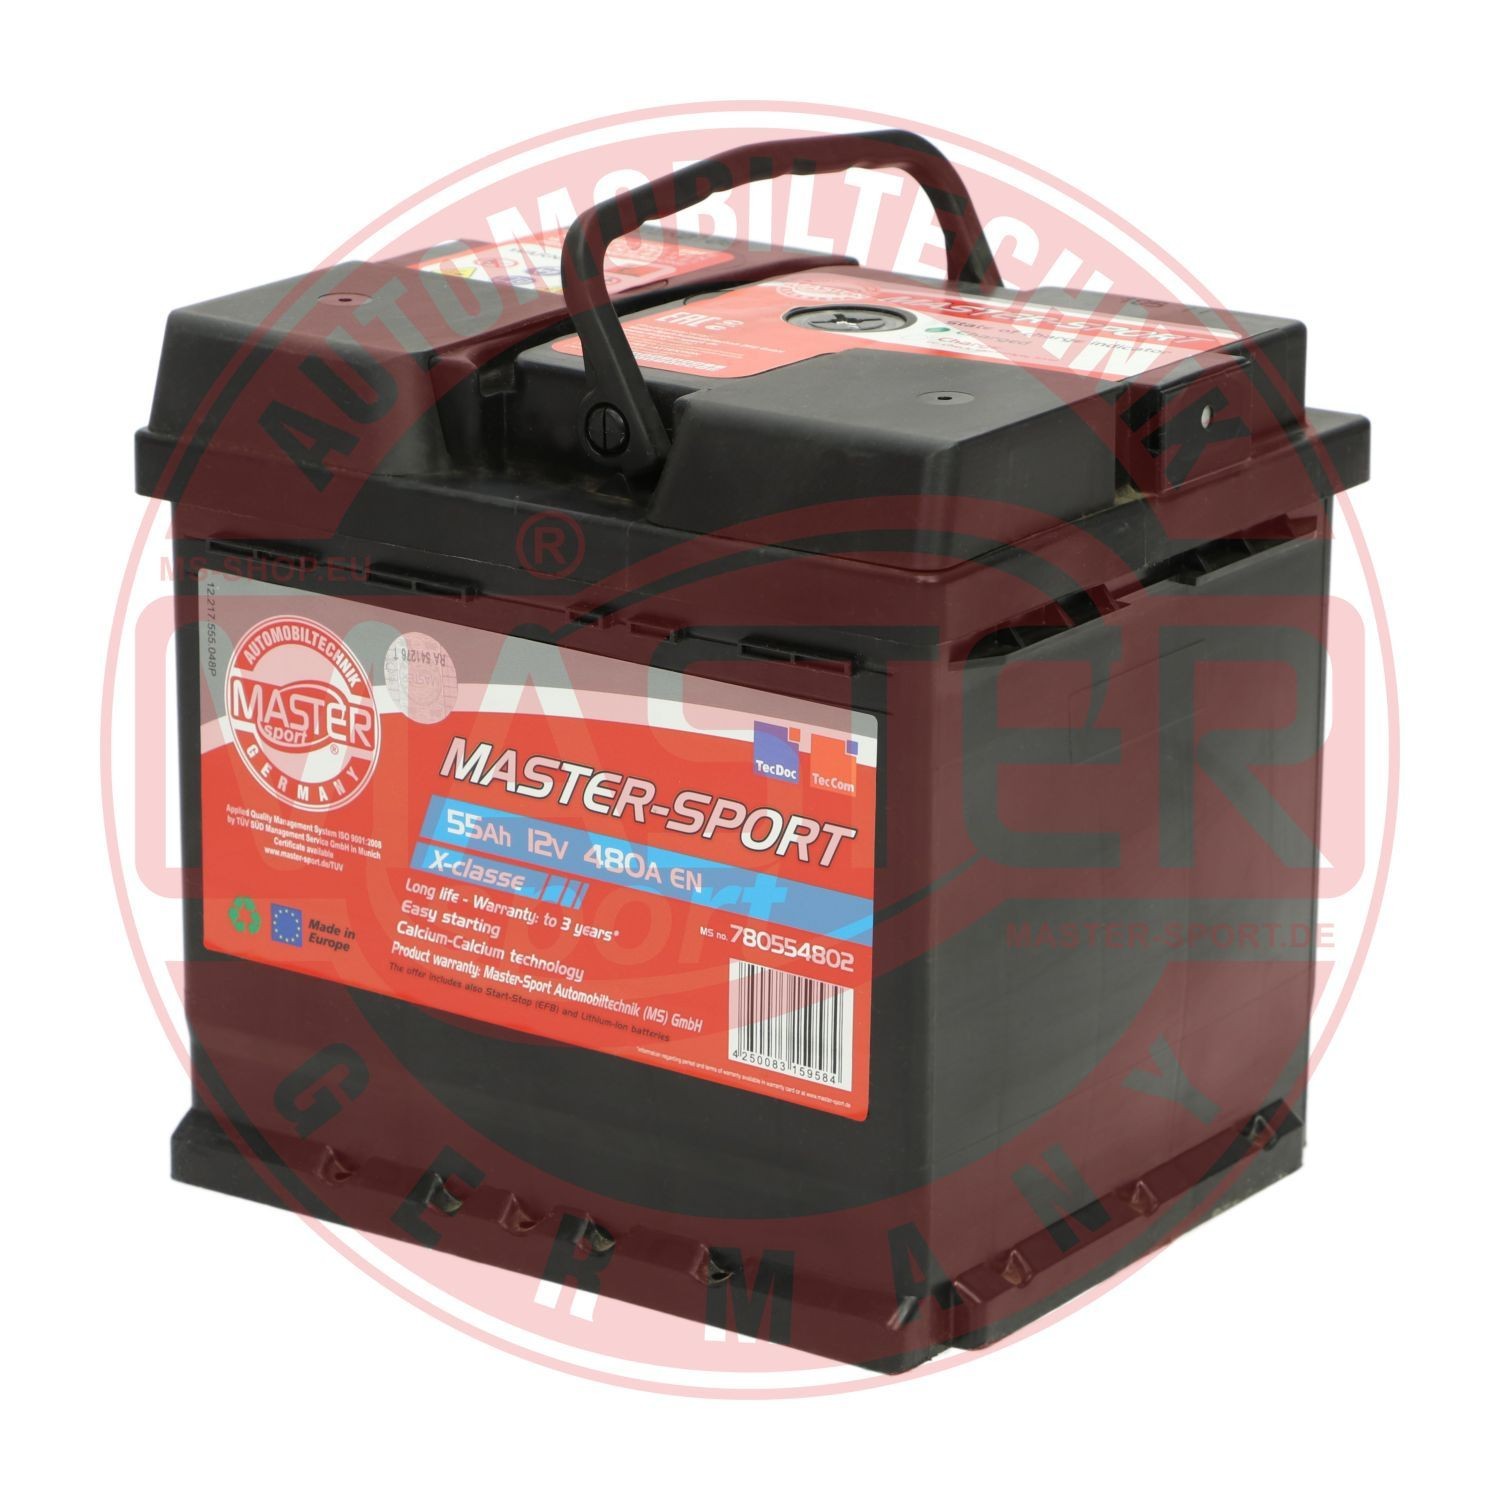 780554802 MASTER-SPORT Car battery SUZUKI 12V 55Ah 480A B13 L1 Lead-acid battery